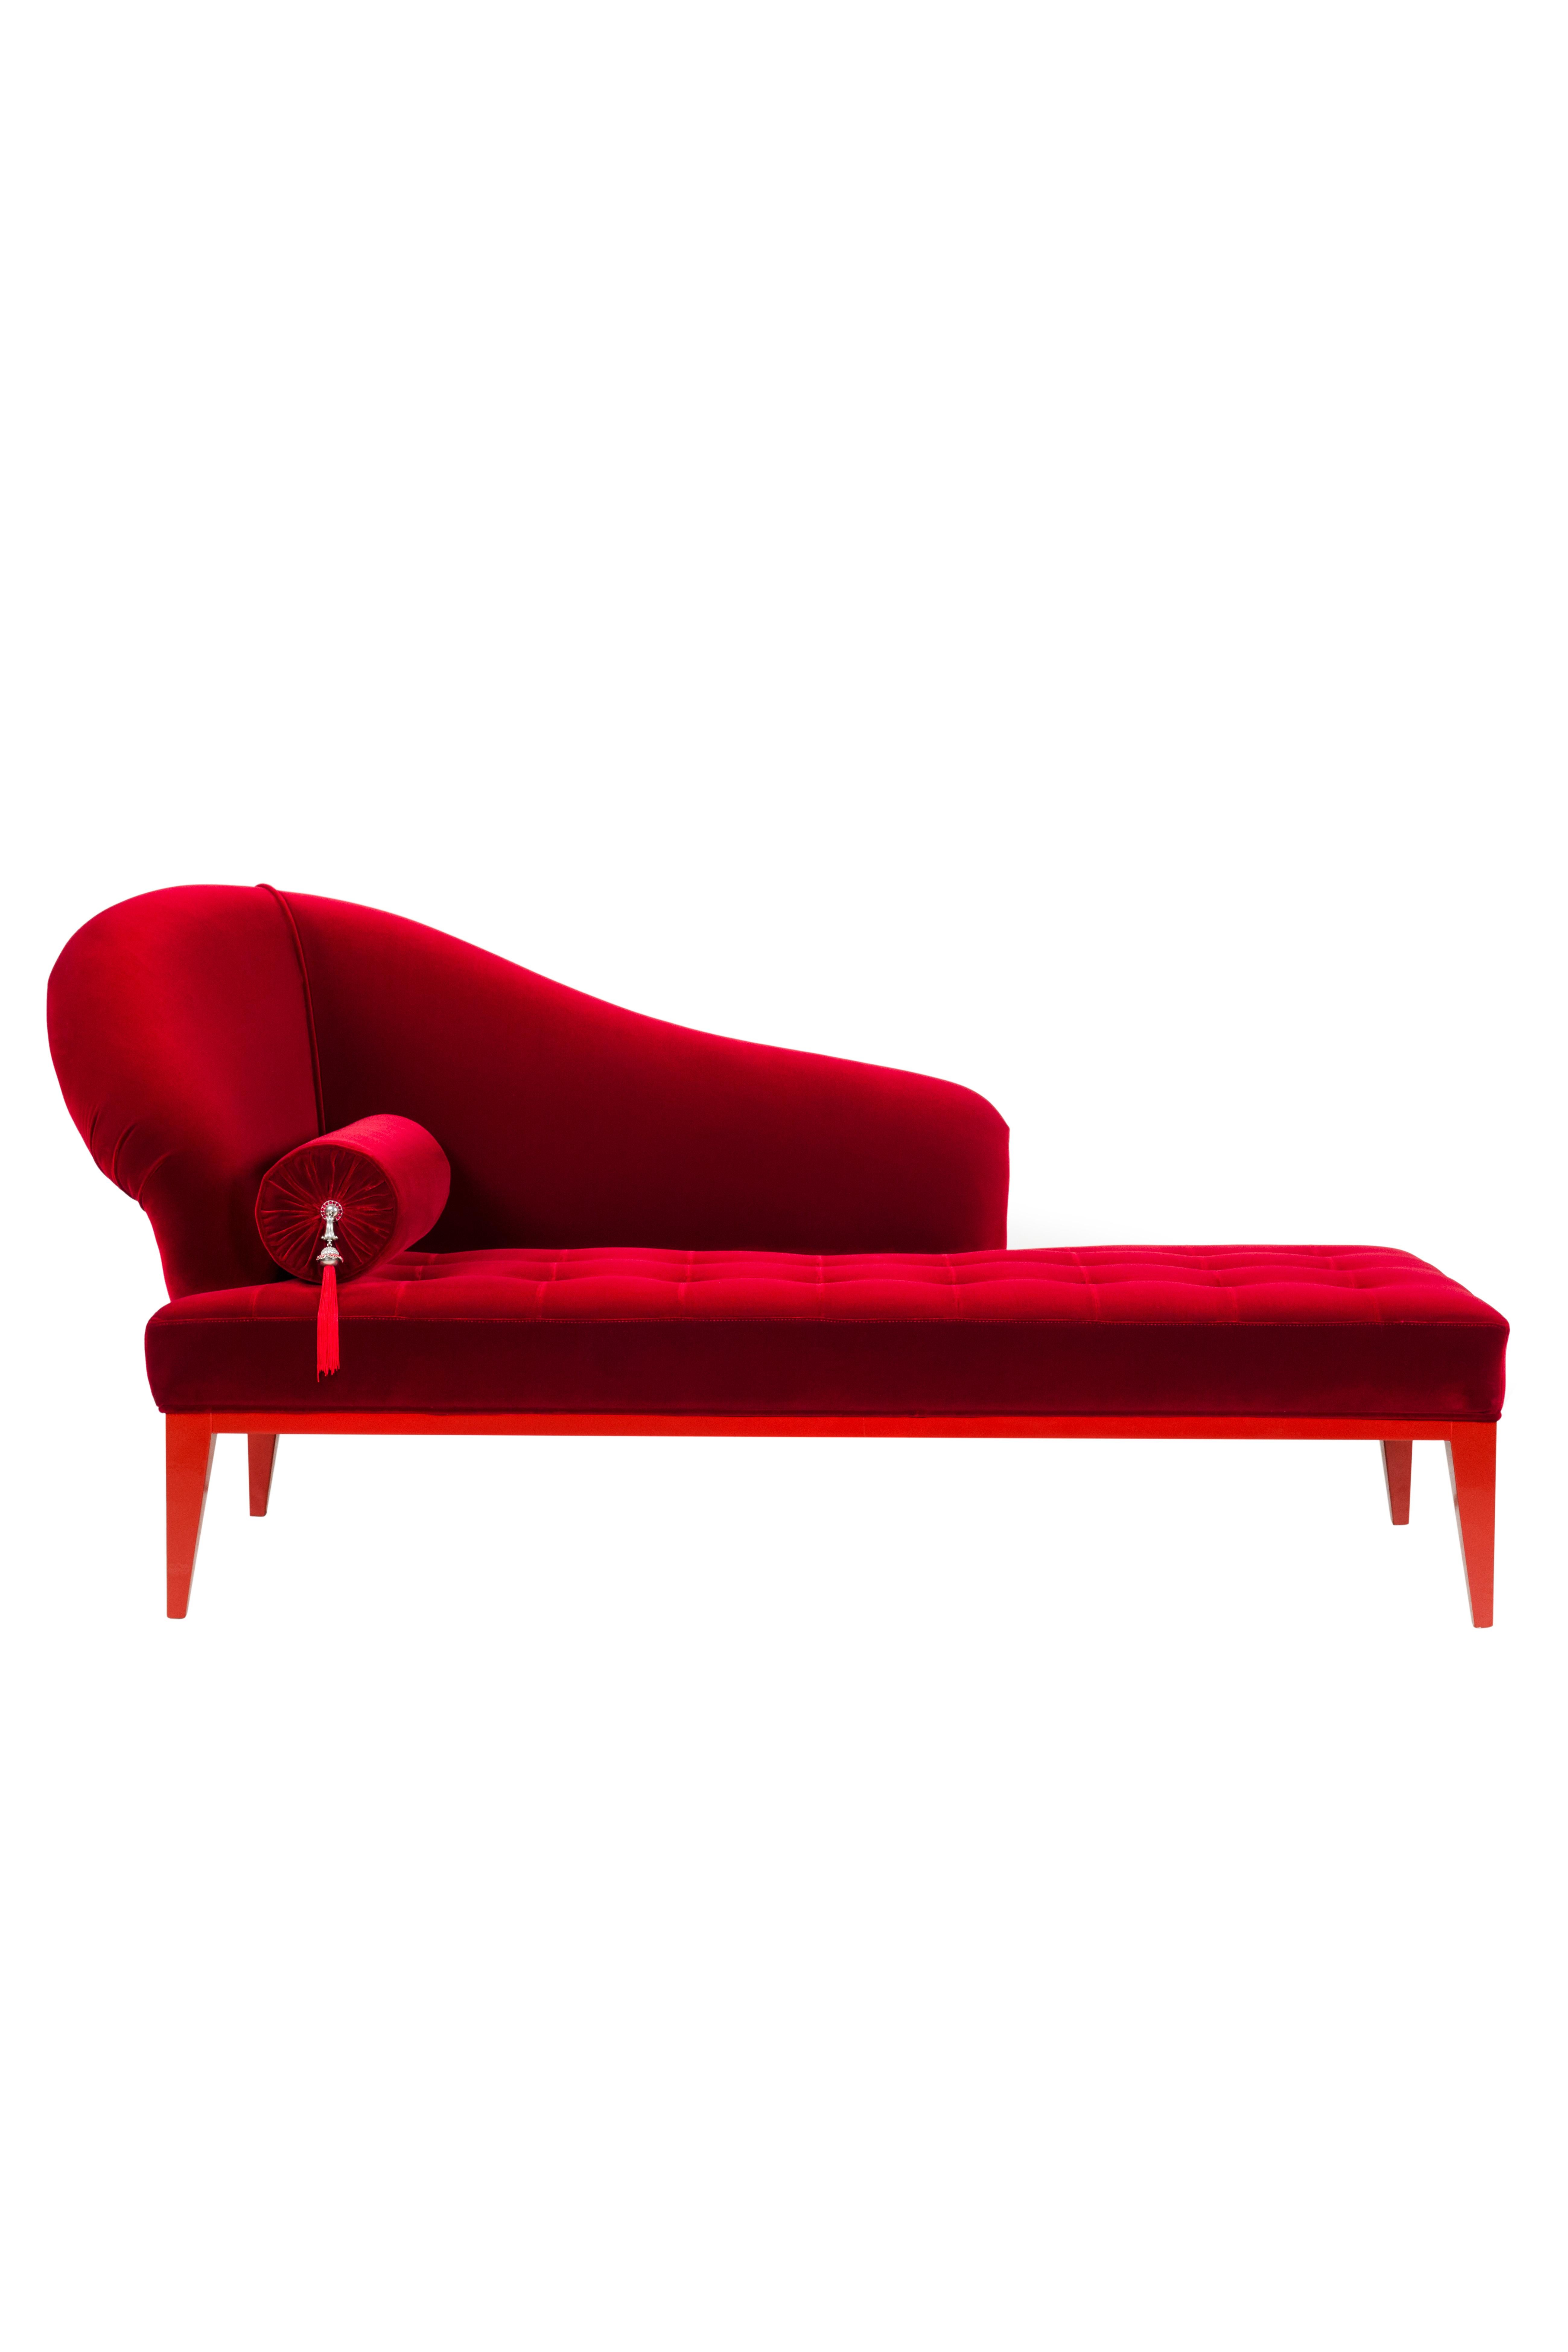 Contemporary Art Deco Sumy Chaise Longue DEDAR Red Cotton Velvet Handmade Portugal Greenapple For Sale